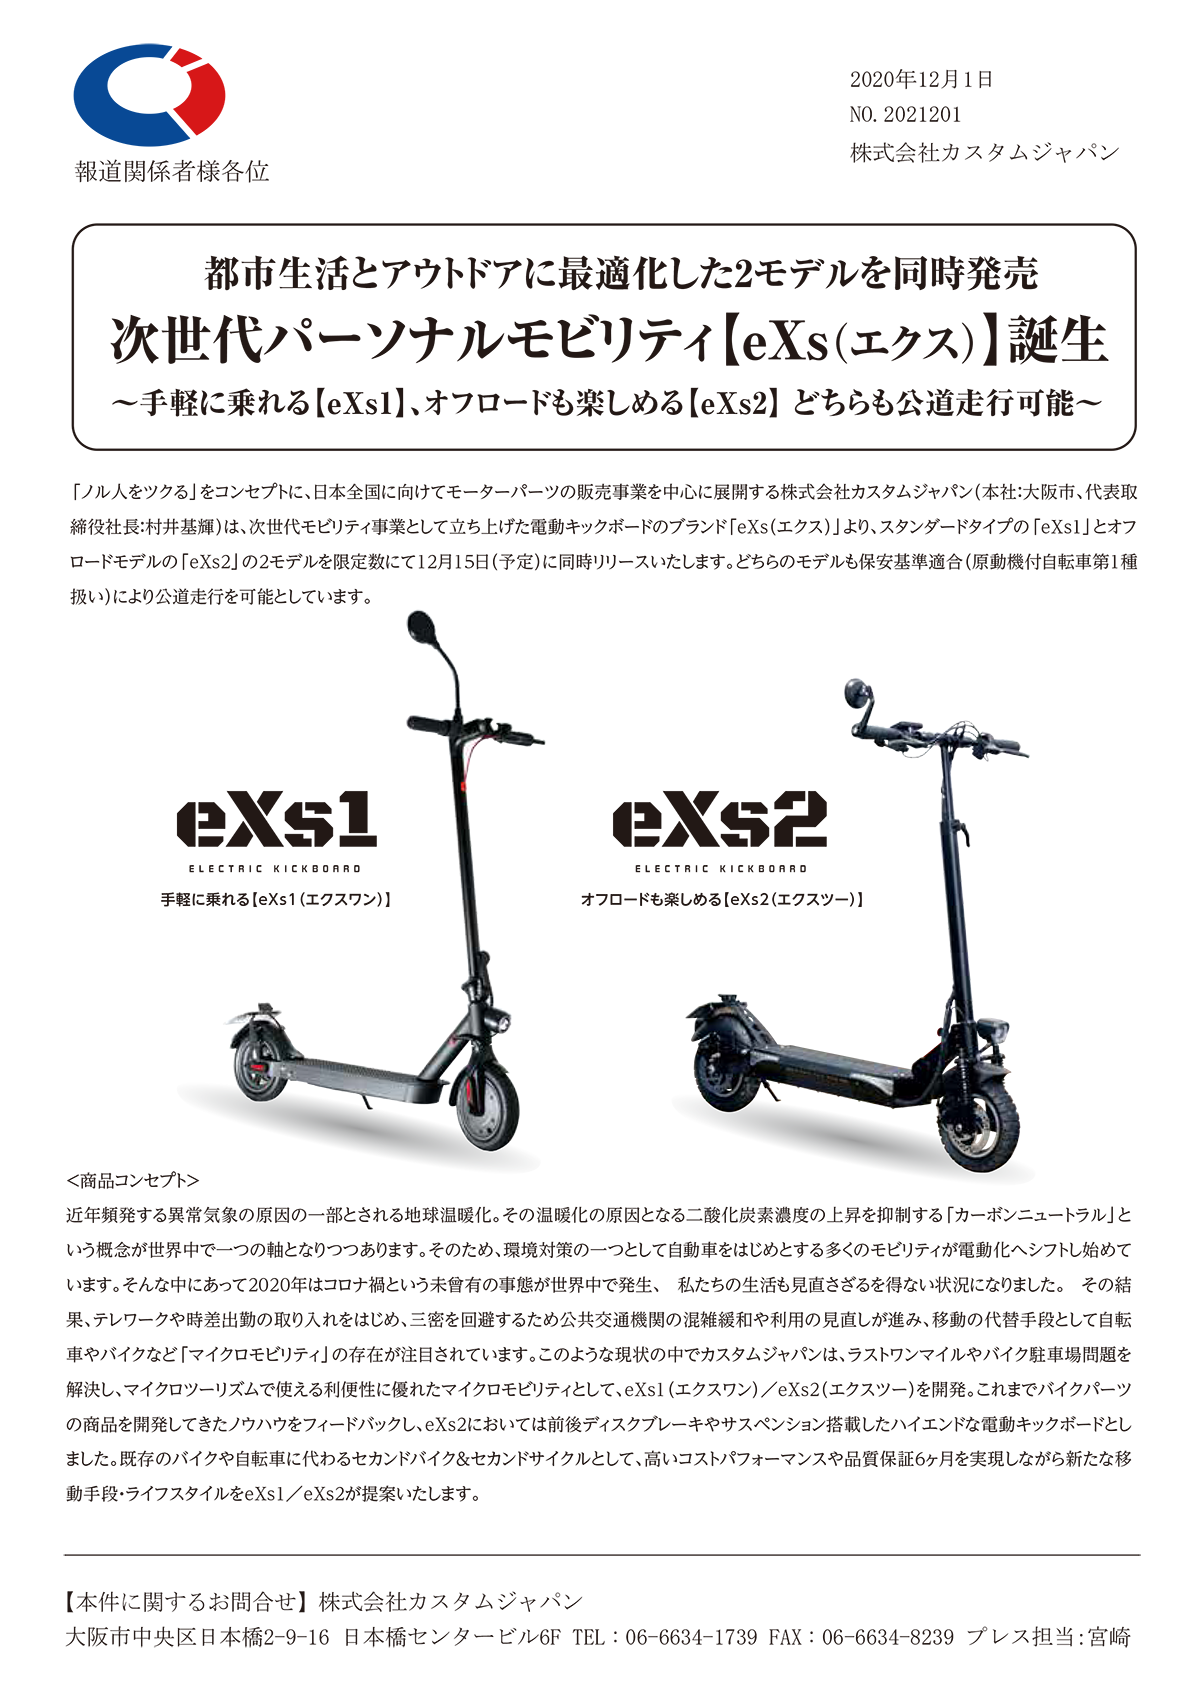 pinch Leonardoda son 次世代パーソナルモビリティ【eXs（エクス）】誕生 | プレスリリース | カスタムジャパン